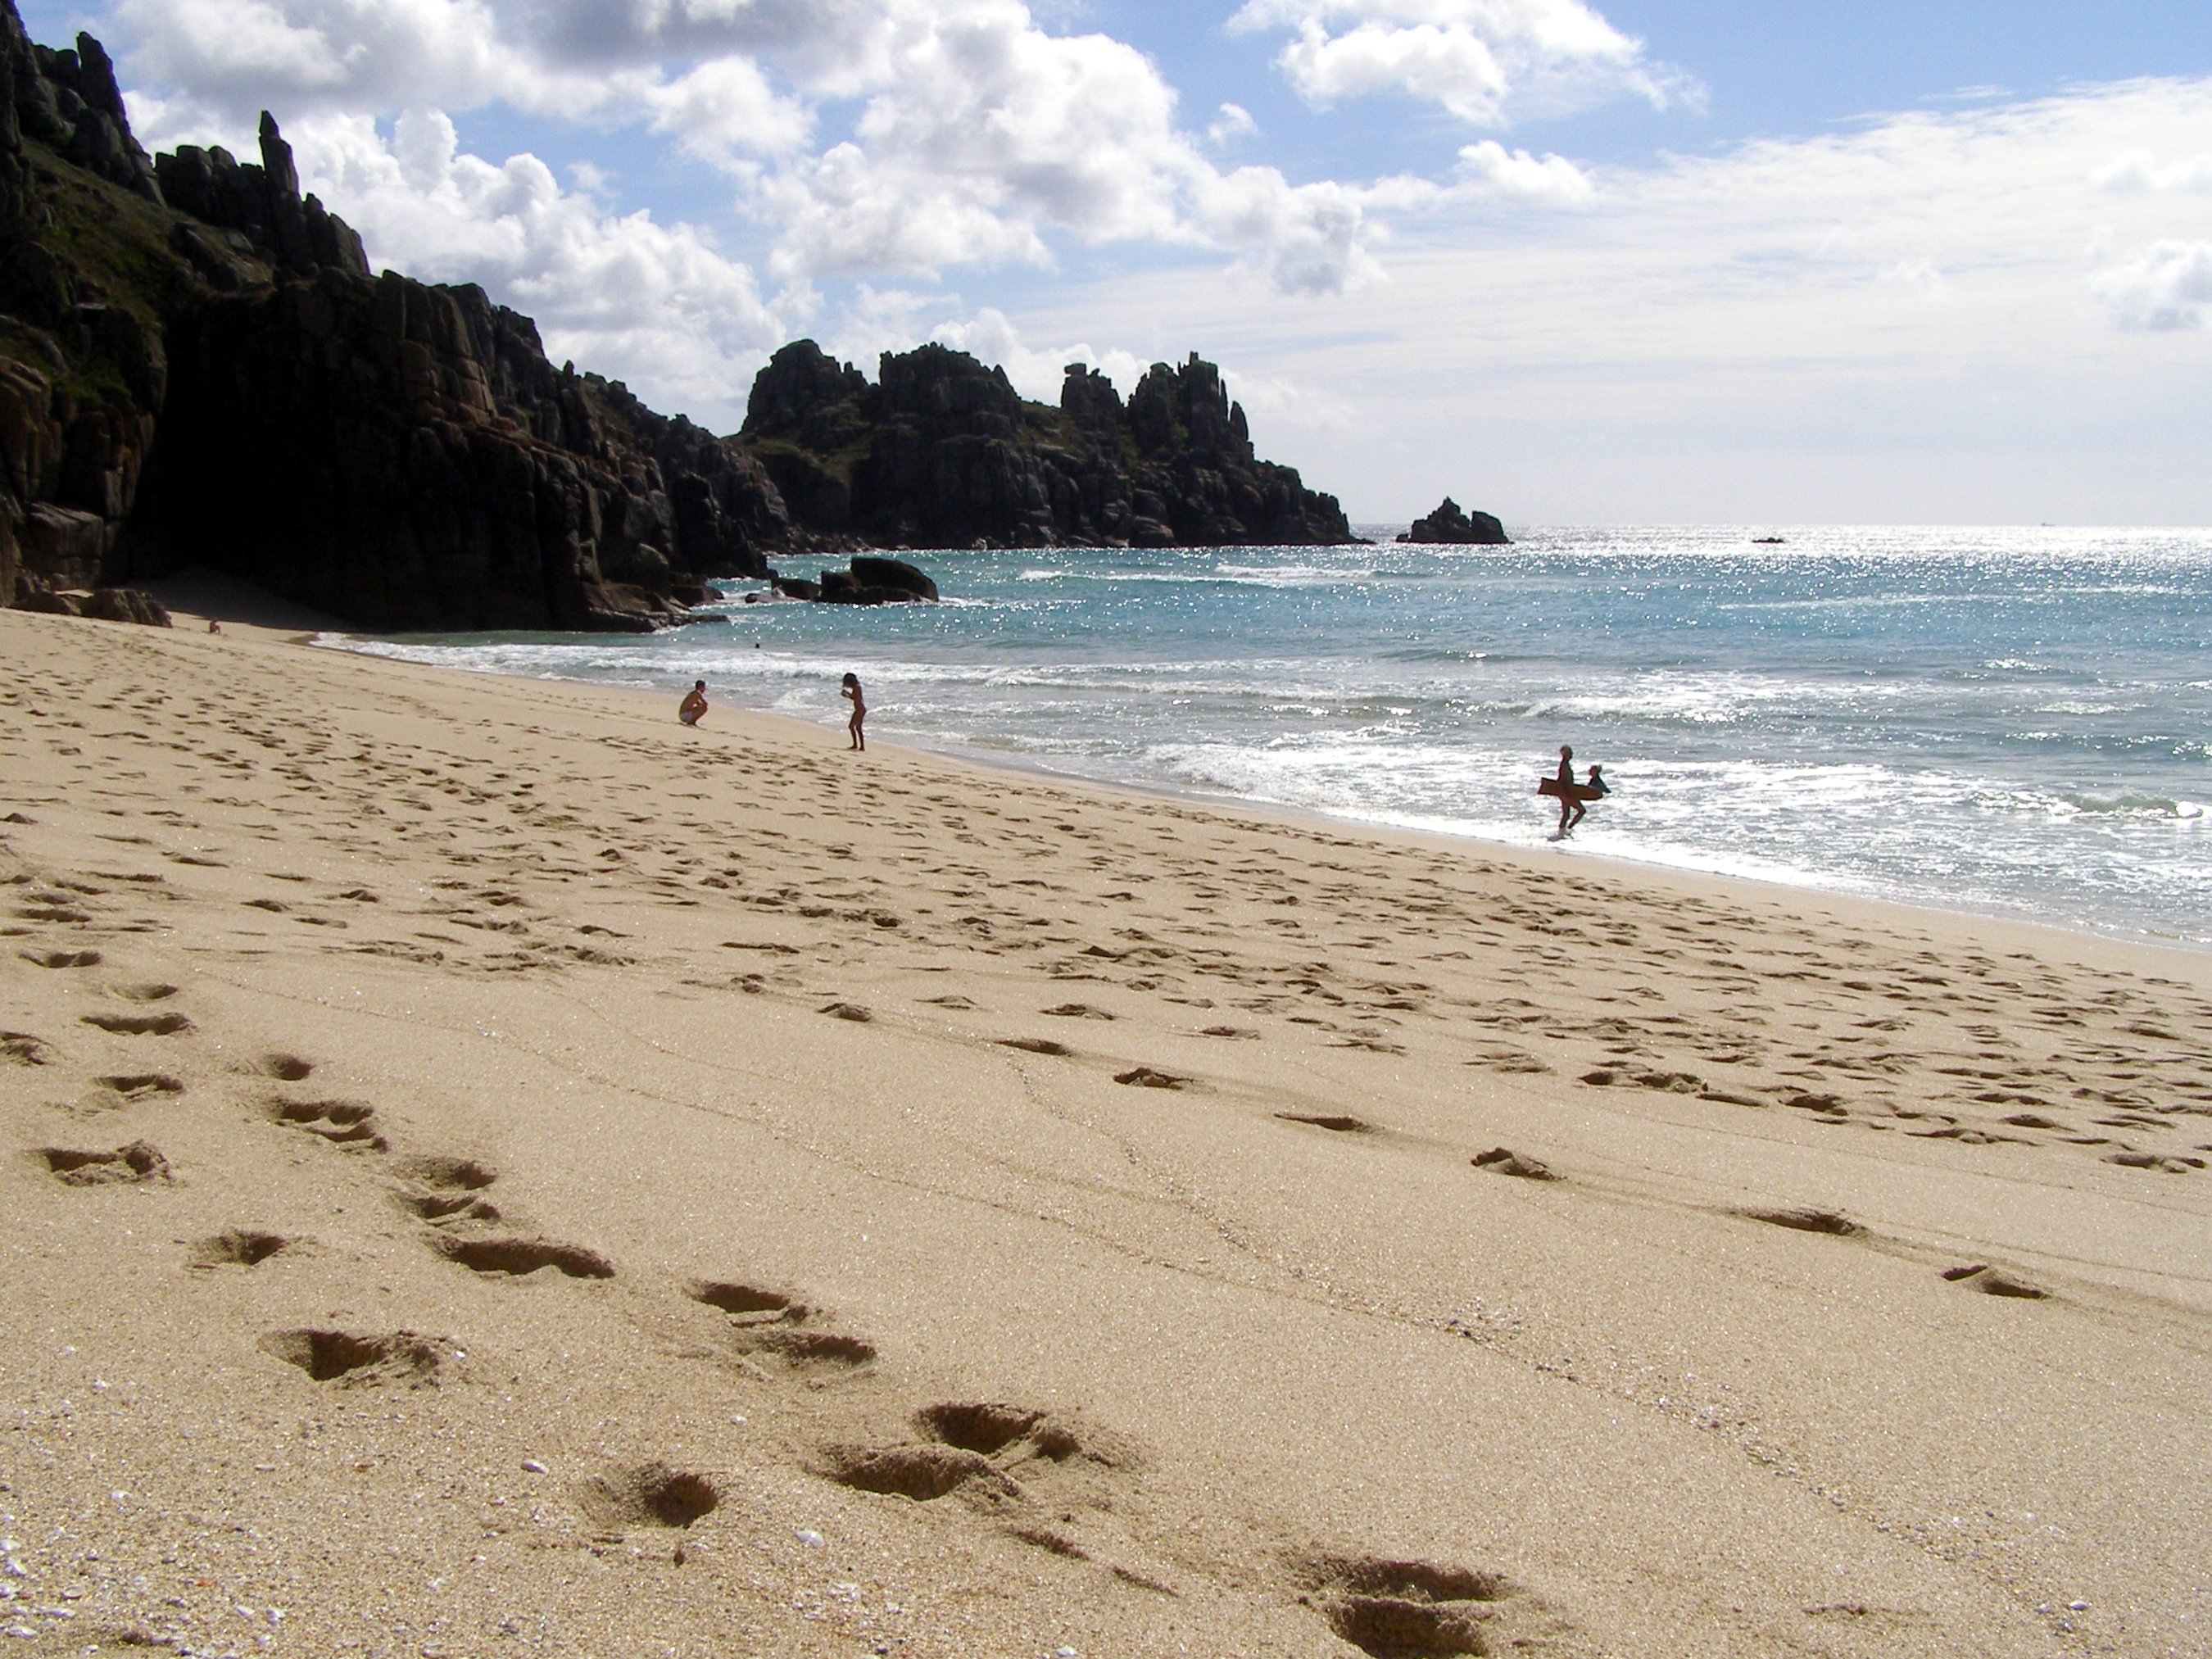 http://upload.wikimedia.org/wikipedia/commons/8/86/Pednvounder_beach_footprints.jpg